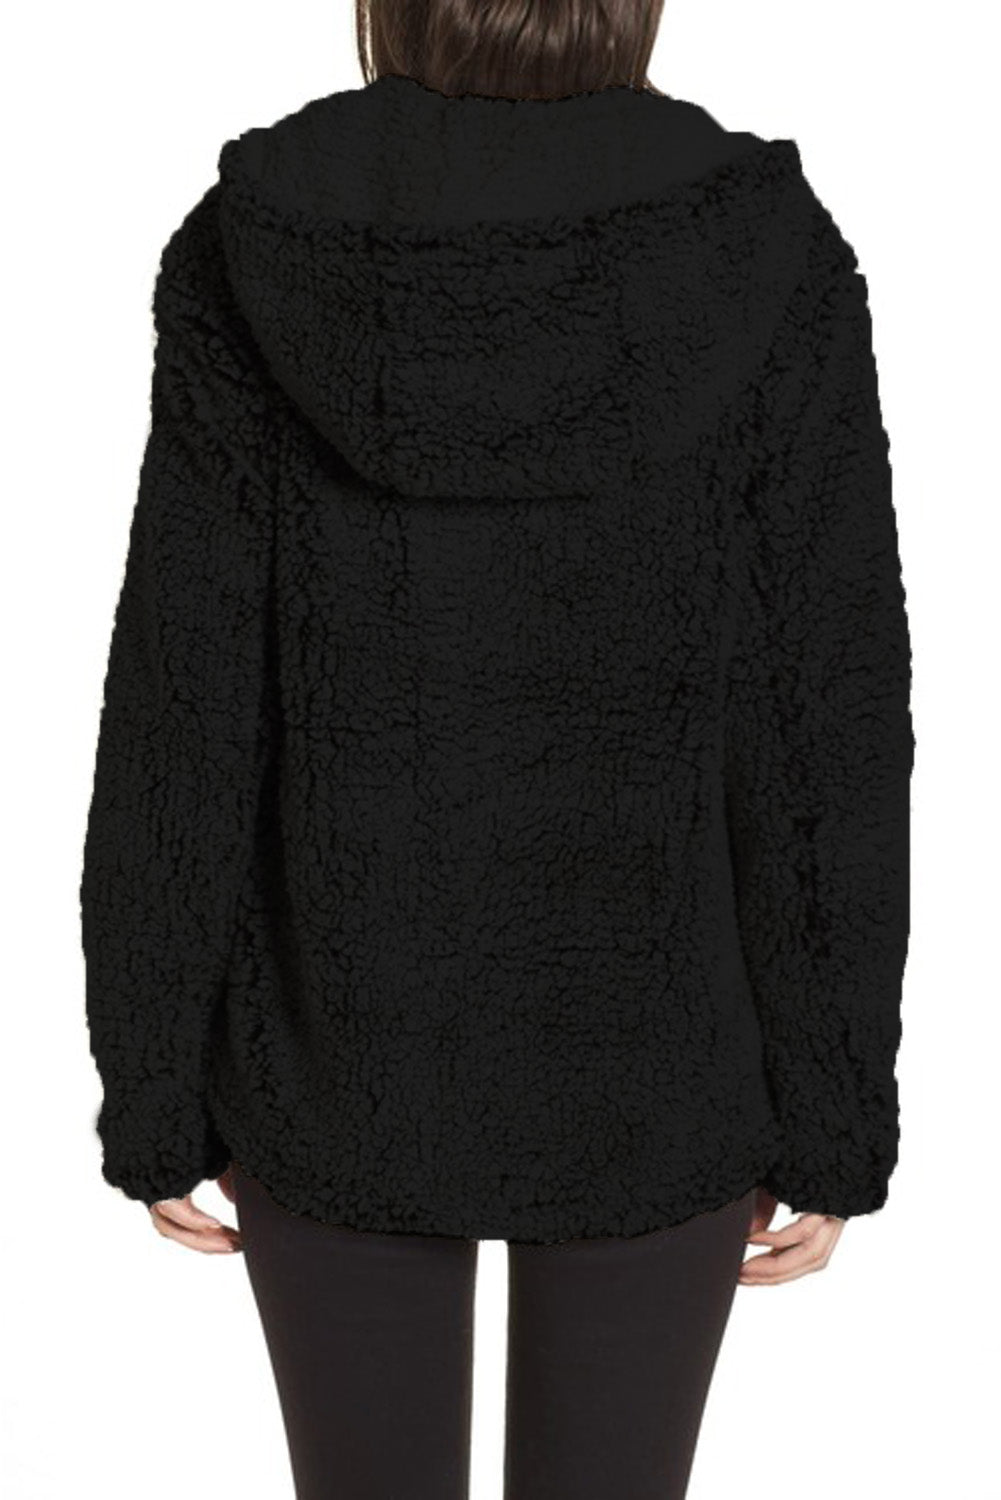 Khaki Zipper Hooded Faux Fleece Solid Color Jacket